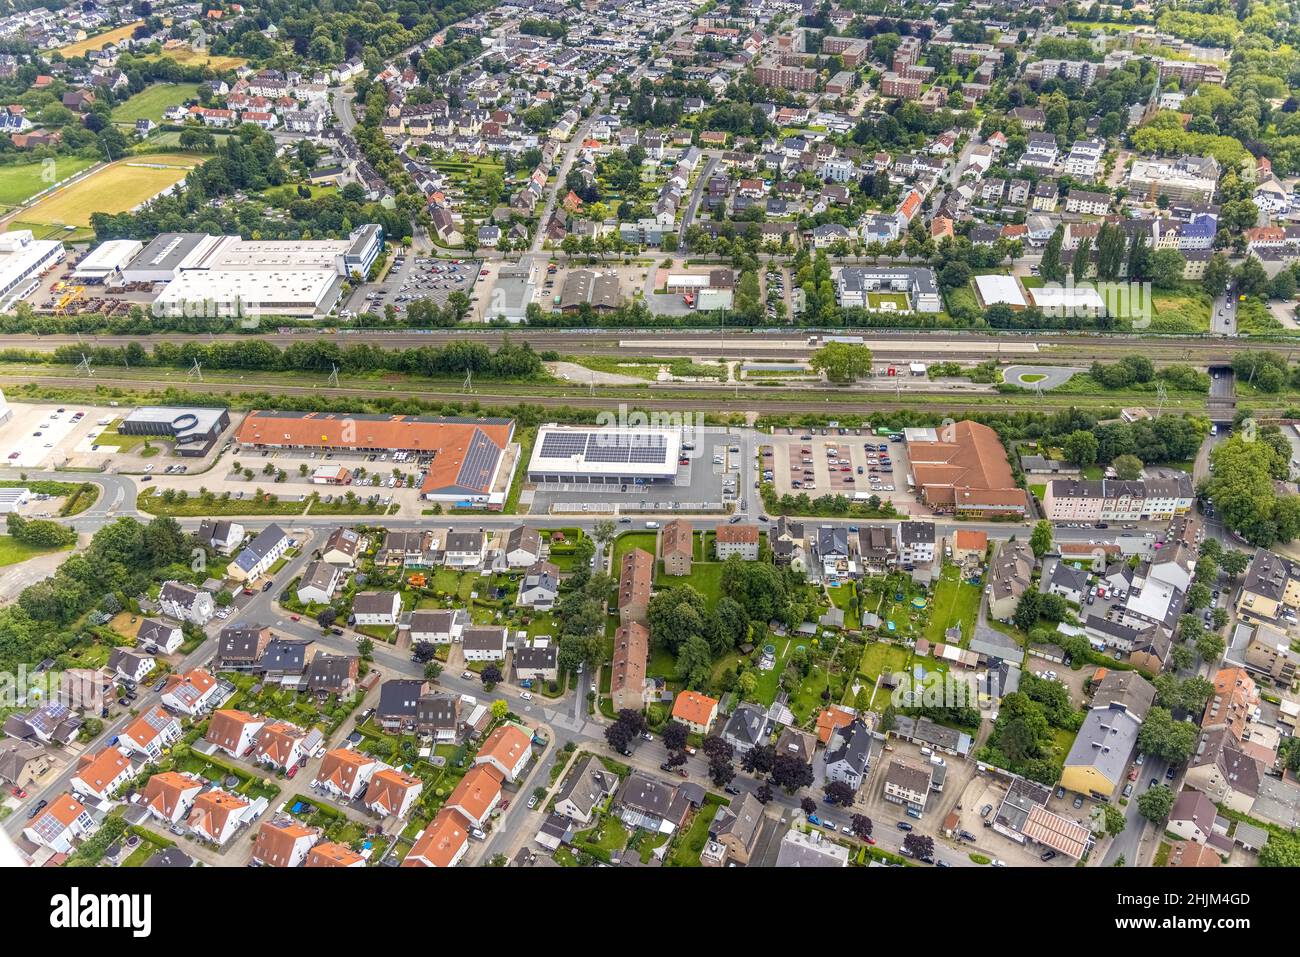 Aerial photograph, Holzwickede railway station, local supply centre, new Aldi SuperMarkt, Freiberg, Holzwickede, Ruhr area, North Rhine-Westphalia, Ge Stock Photo